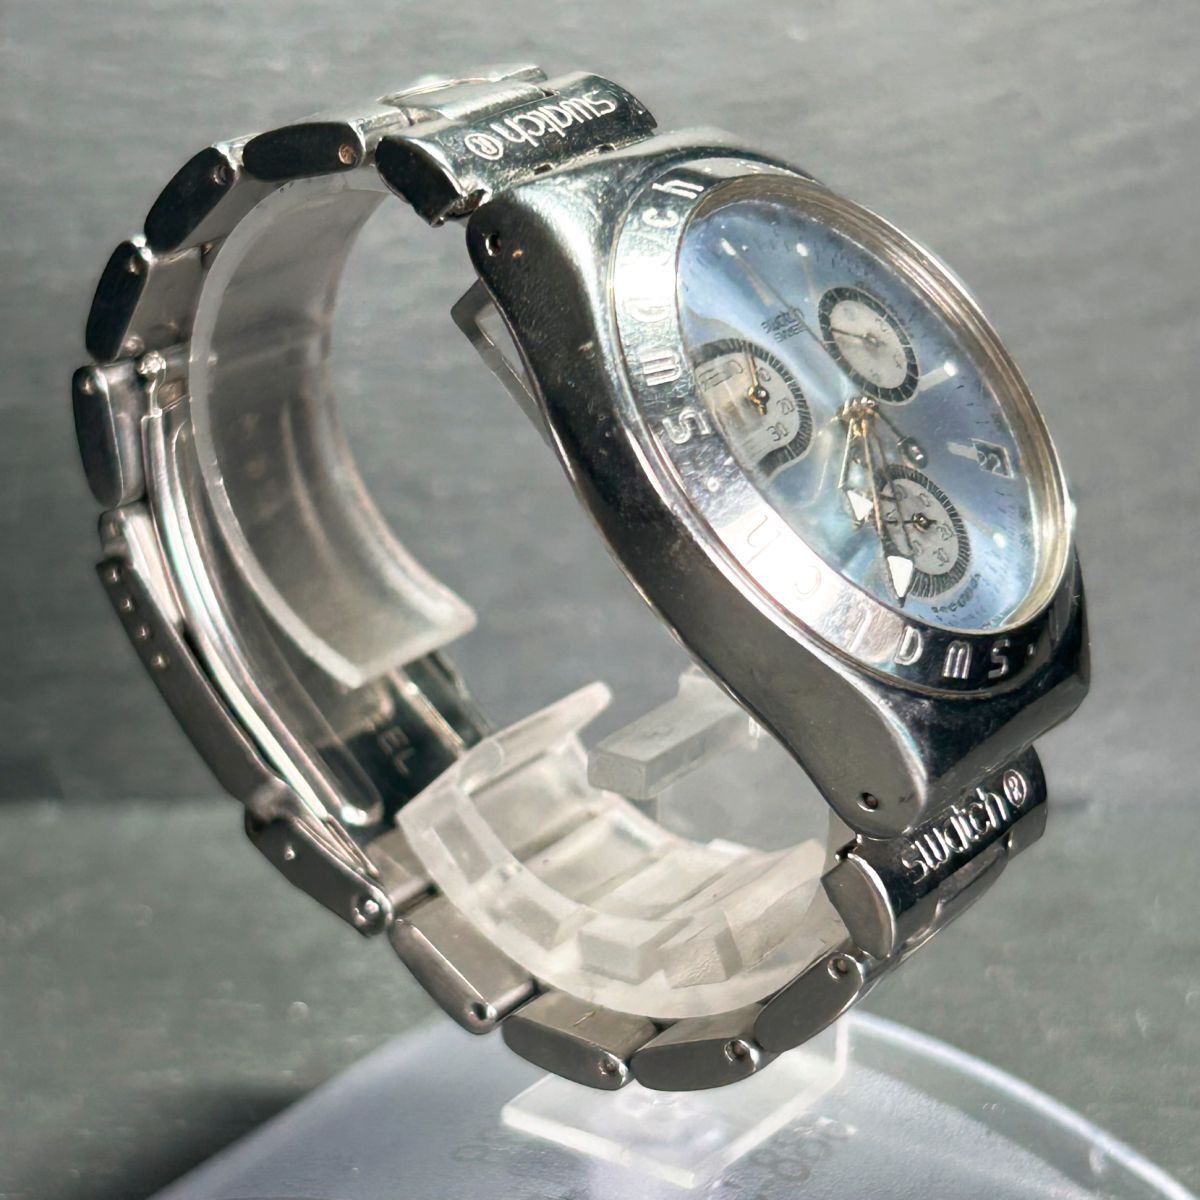 SWATCH Swatch IRONY Irony CHRONO Chrono AG1997 наручные часы кварц аналог хронограф ice blue мужской новый товар батарейка заменена 